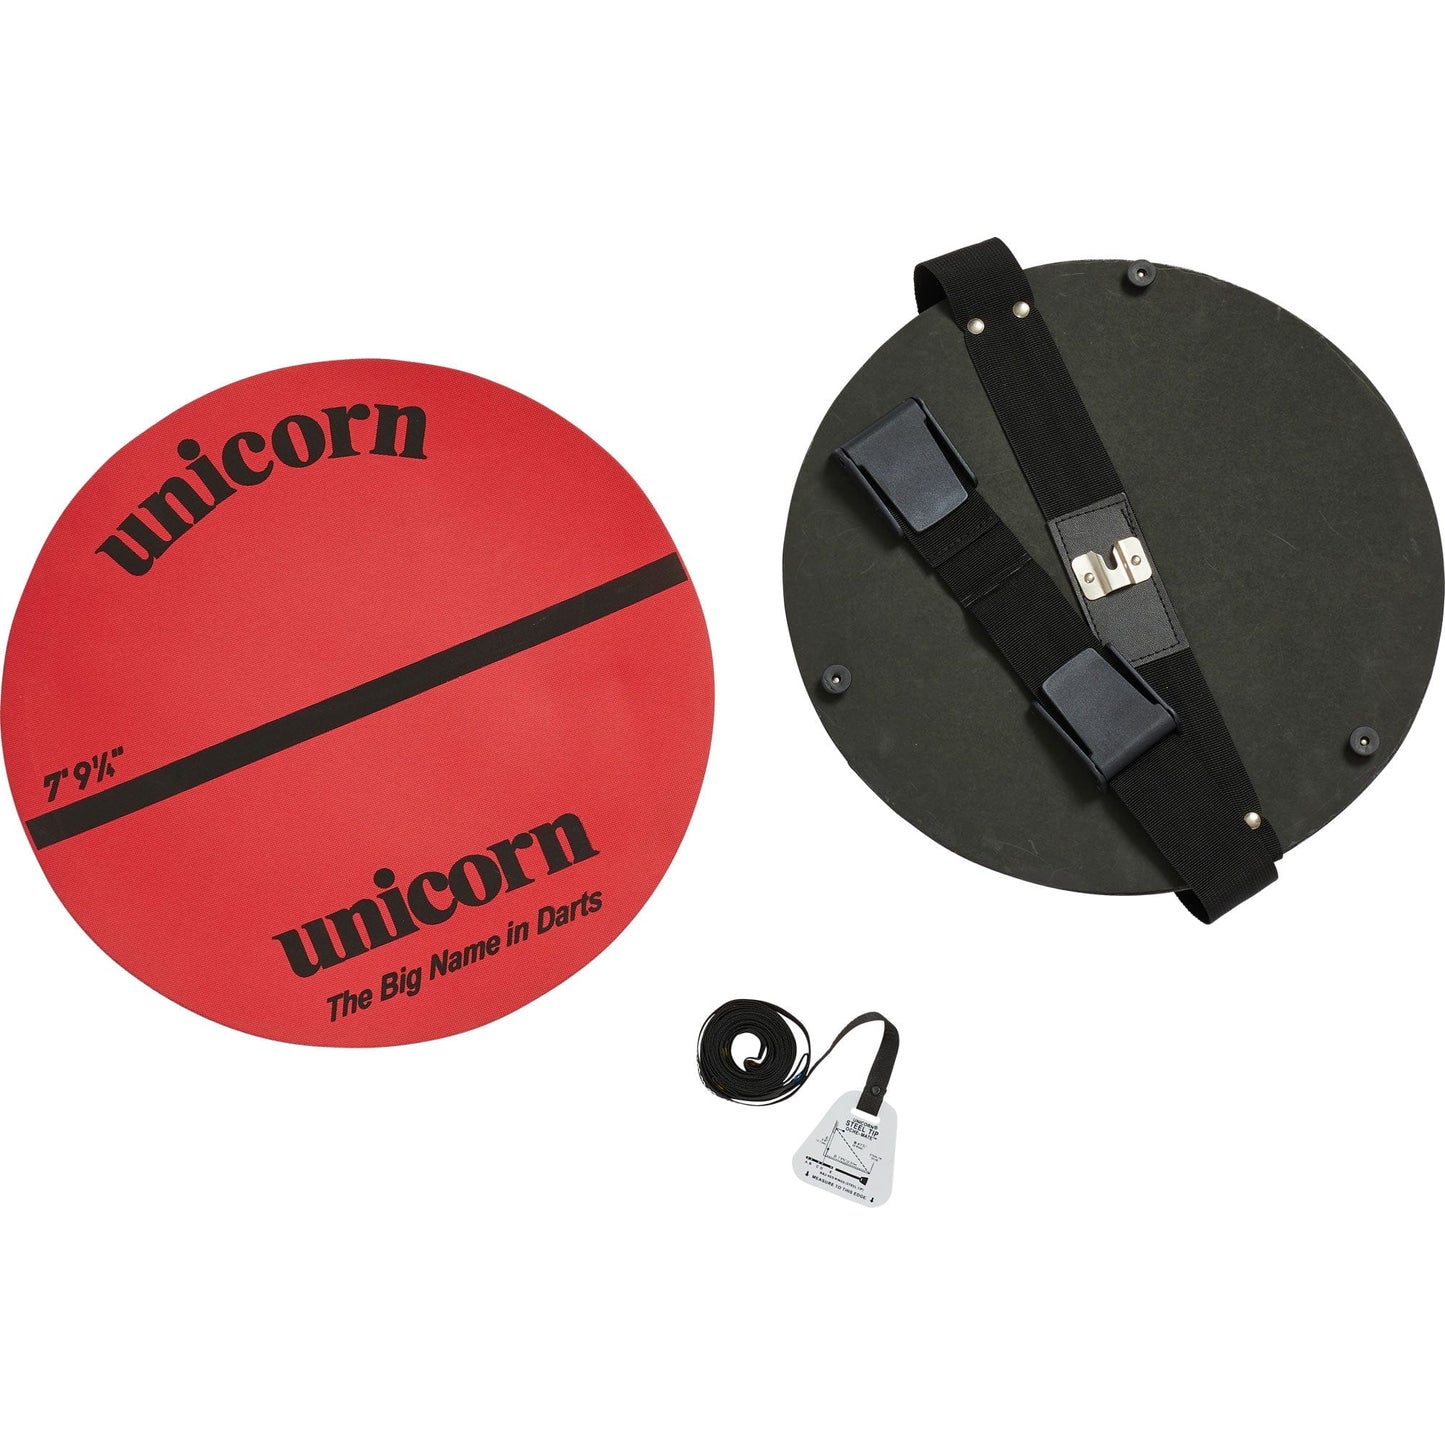 Unicorn On Tour - Portable - No Dartboard - Door Hanging System - Lite Edition